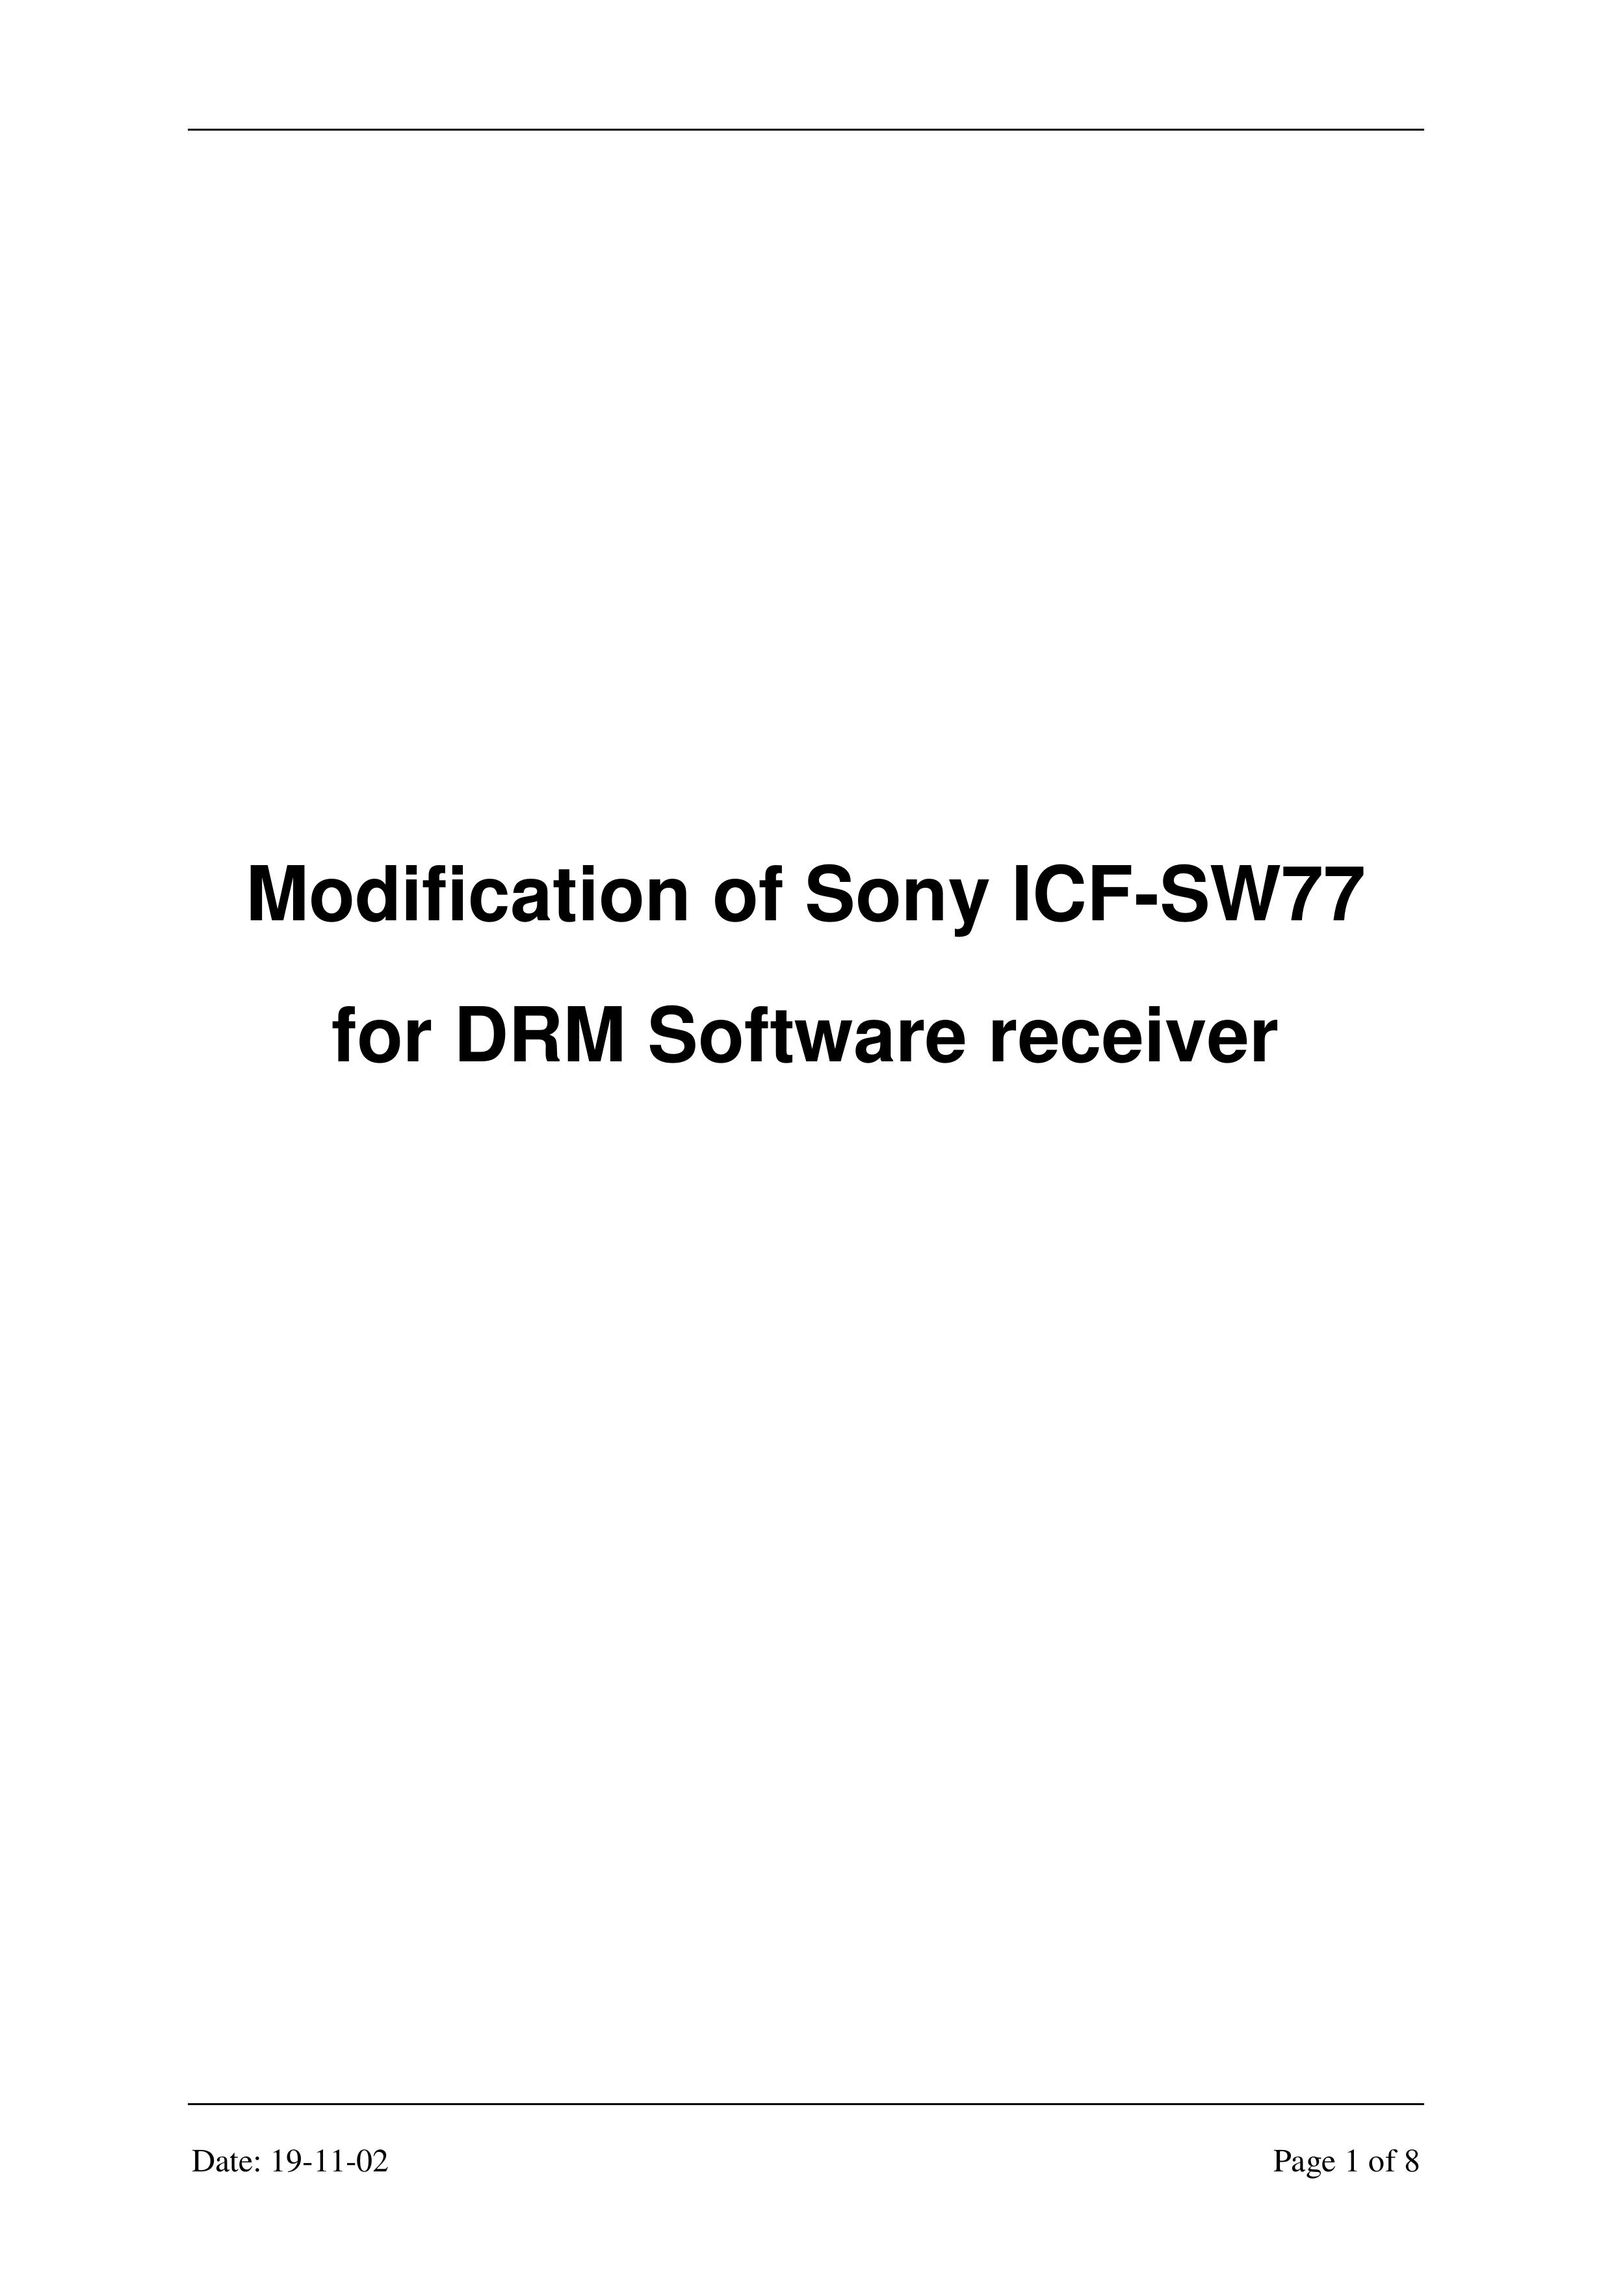 Sony ICF-SW77 Frozen Dessert Maker User Manual